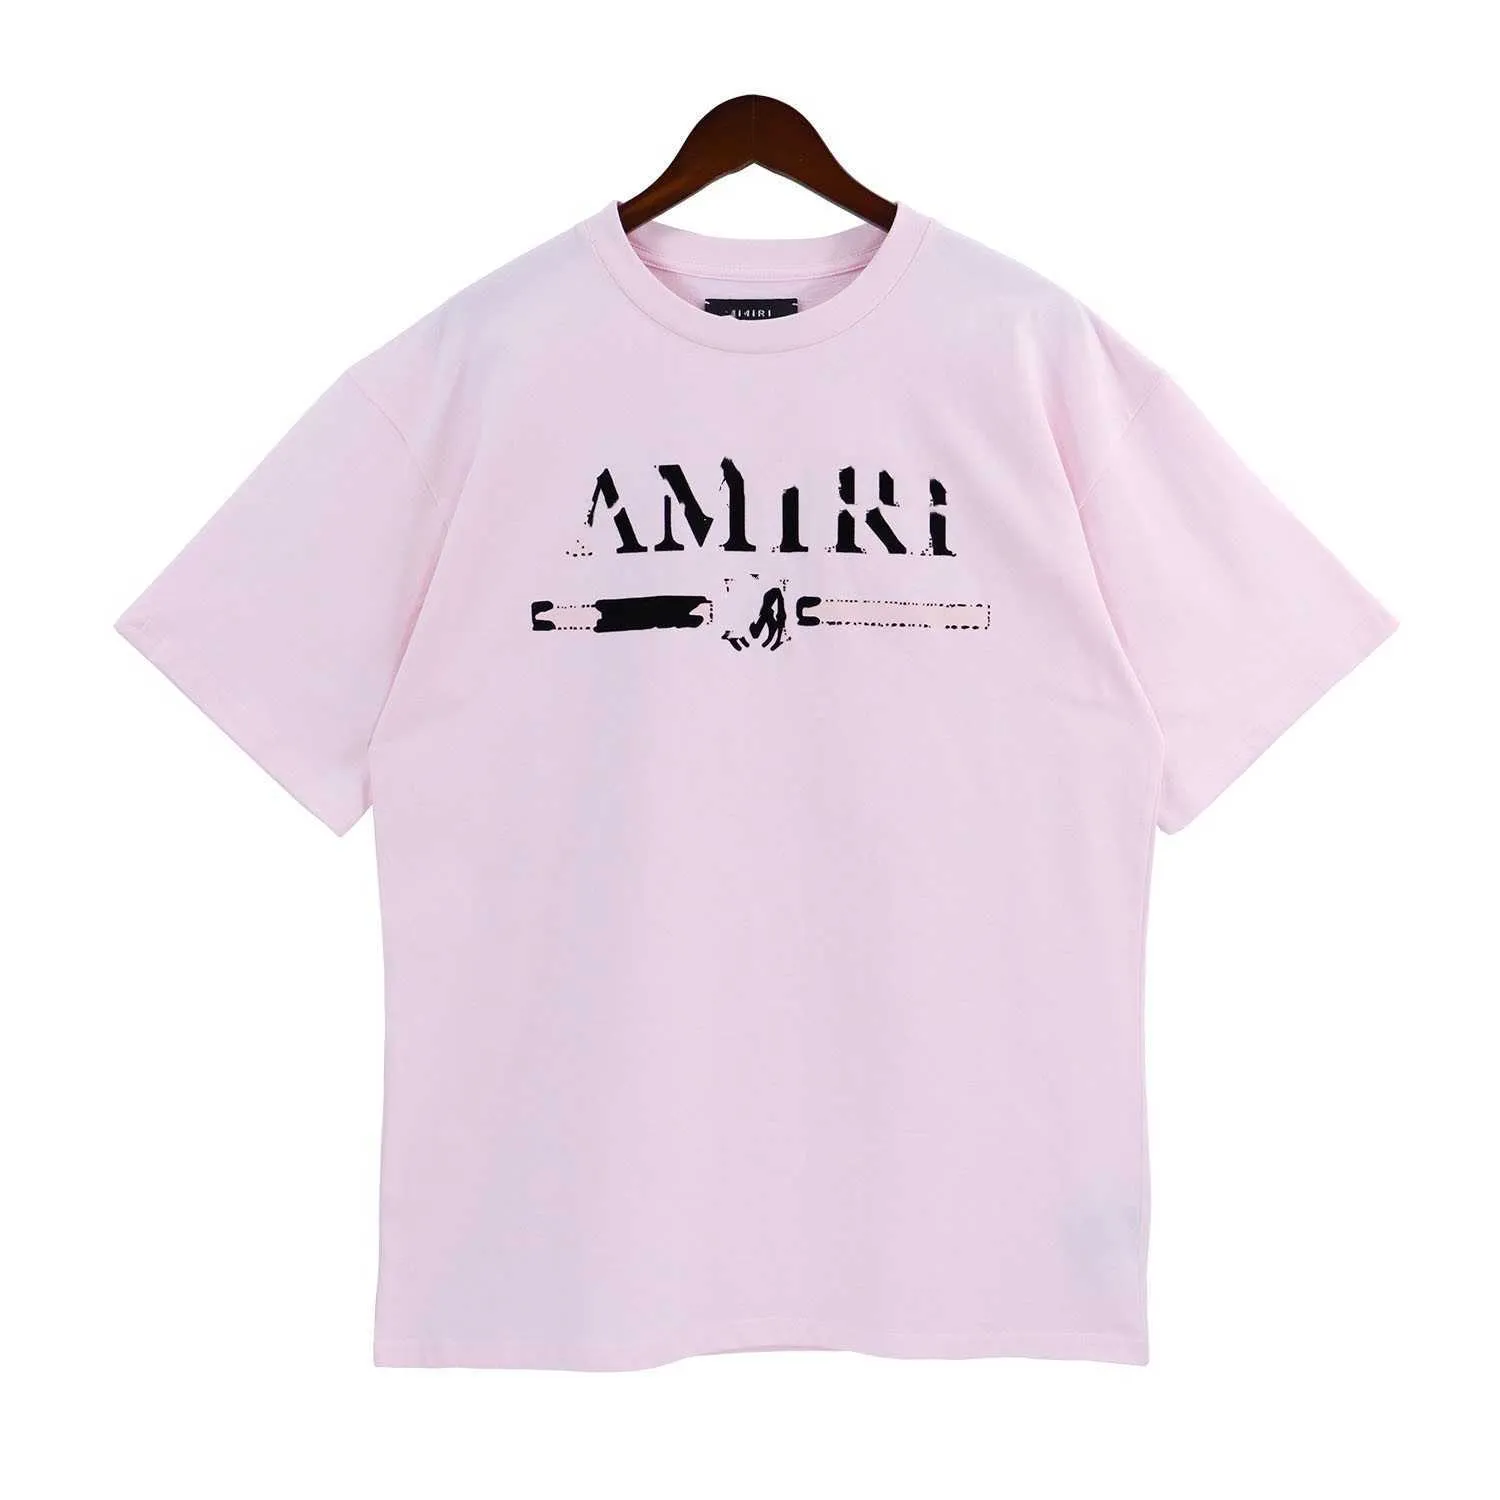 Mens Tshirts Man Amari Amirl Amirlies Am Amis Imiri Amiiri 22SS Mens Shirt Designer For Men Shirts Fashion Tshirt med bokstäver Casual Summer Short Sleeve T T